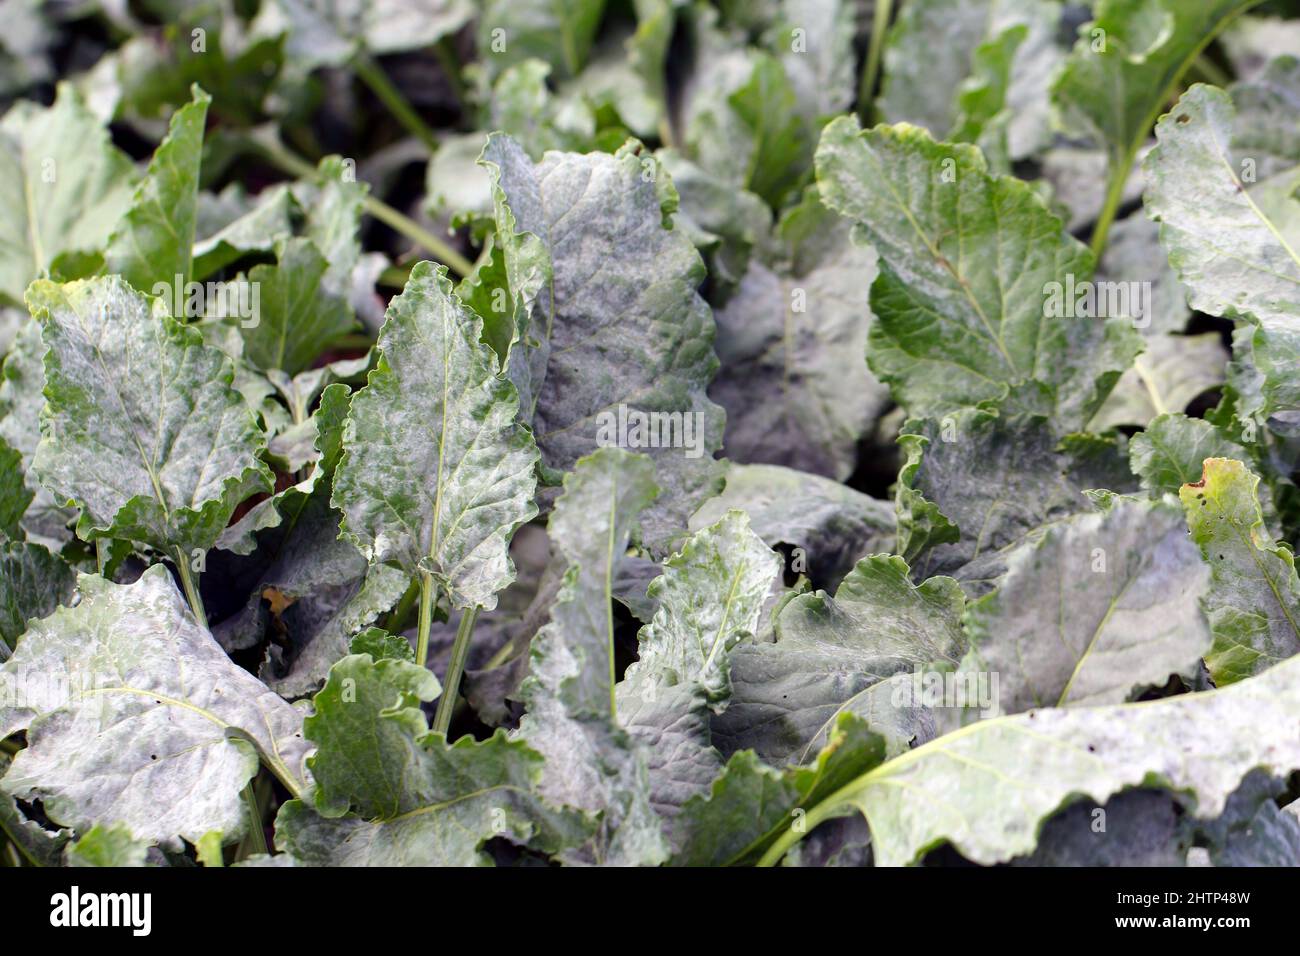 Powdery mildew Erysiphe betae fungal disease on sugar beet leaf Stock Photo